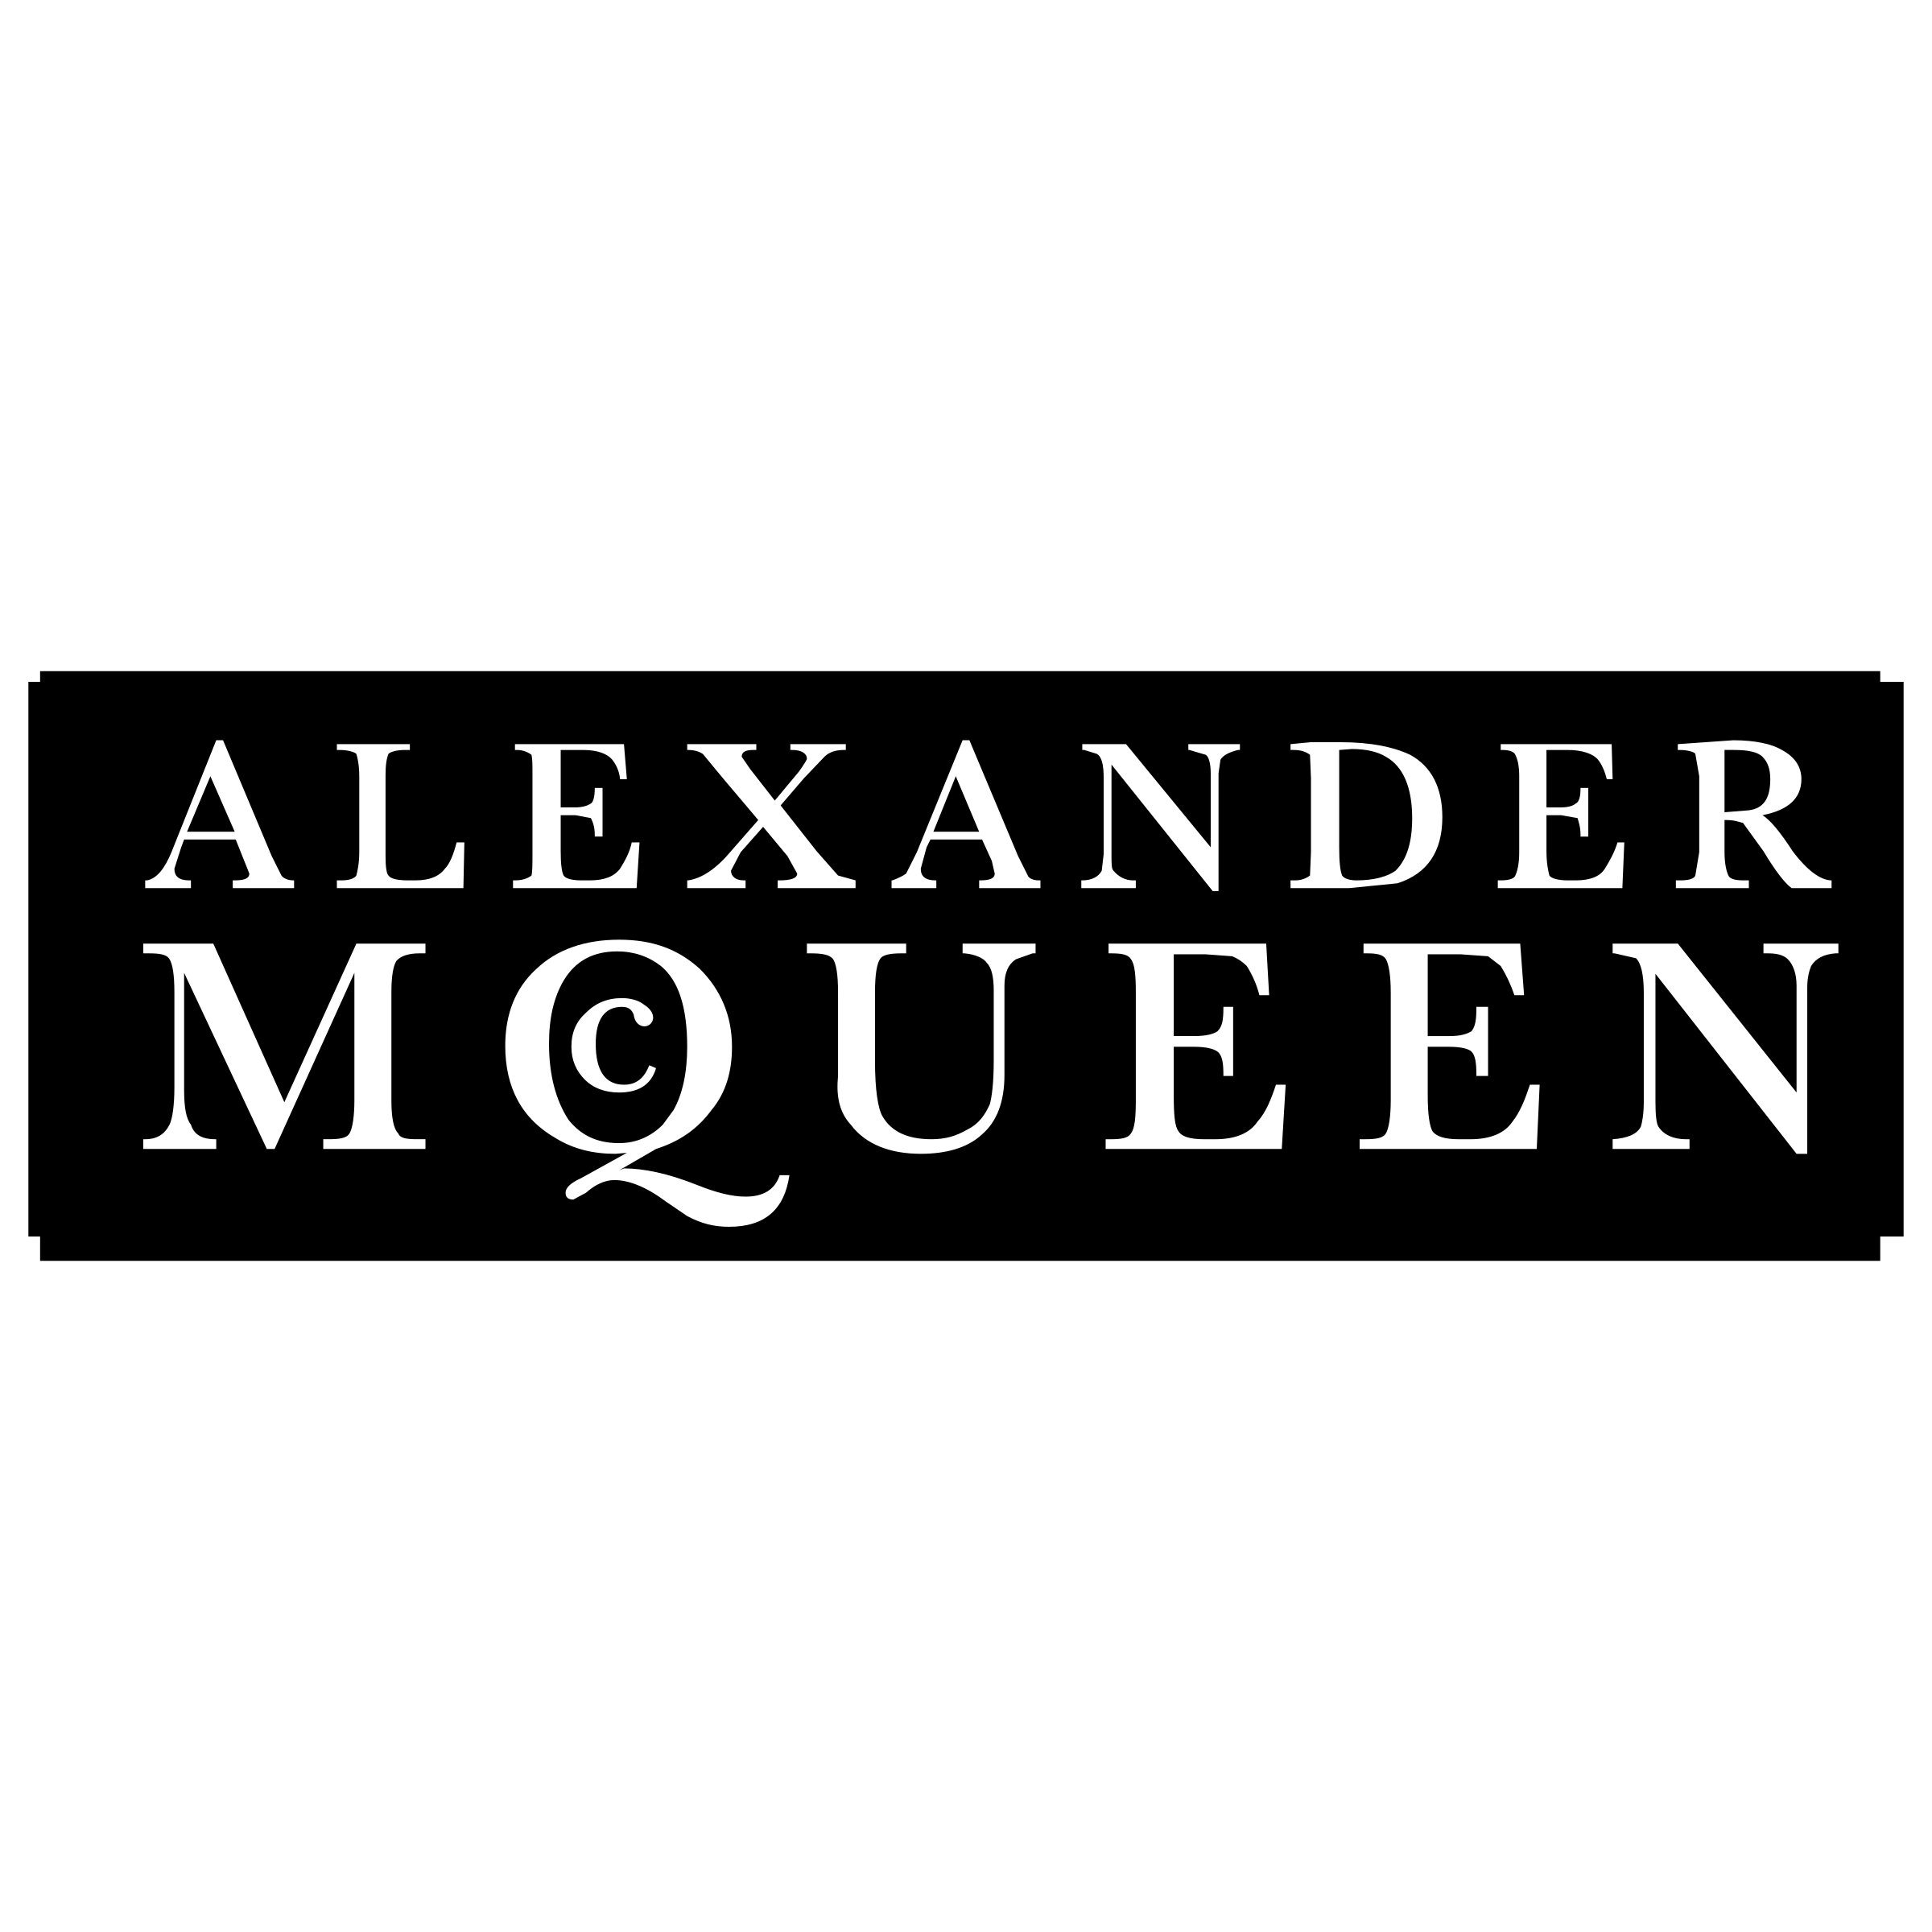 Alexander McQueen Logo - Alexander McQueen Logo PNG Transparent & SVG Vector - Freebie Supply